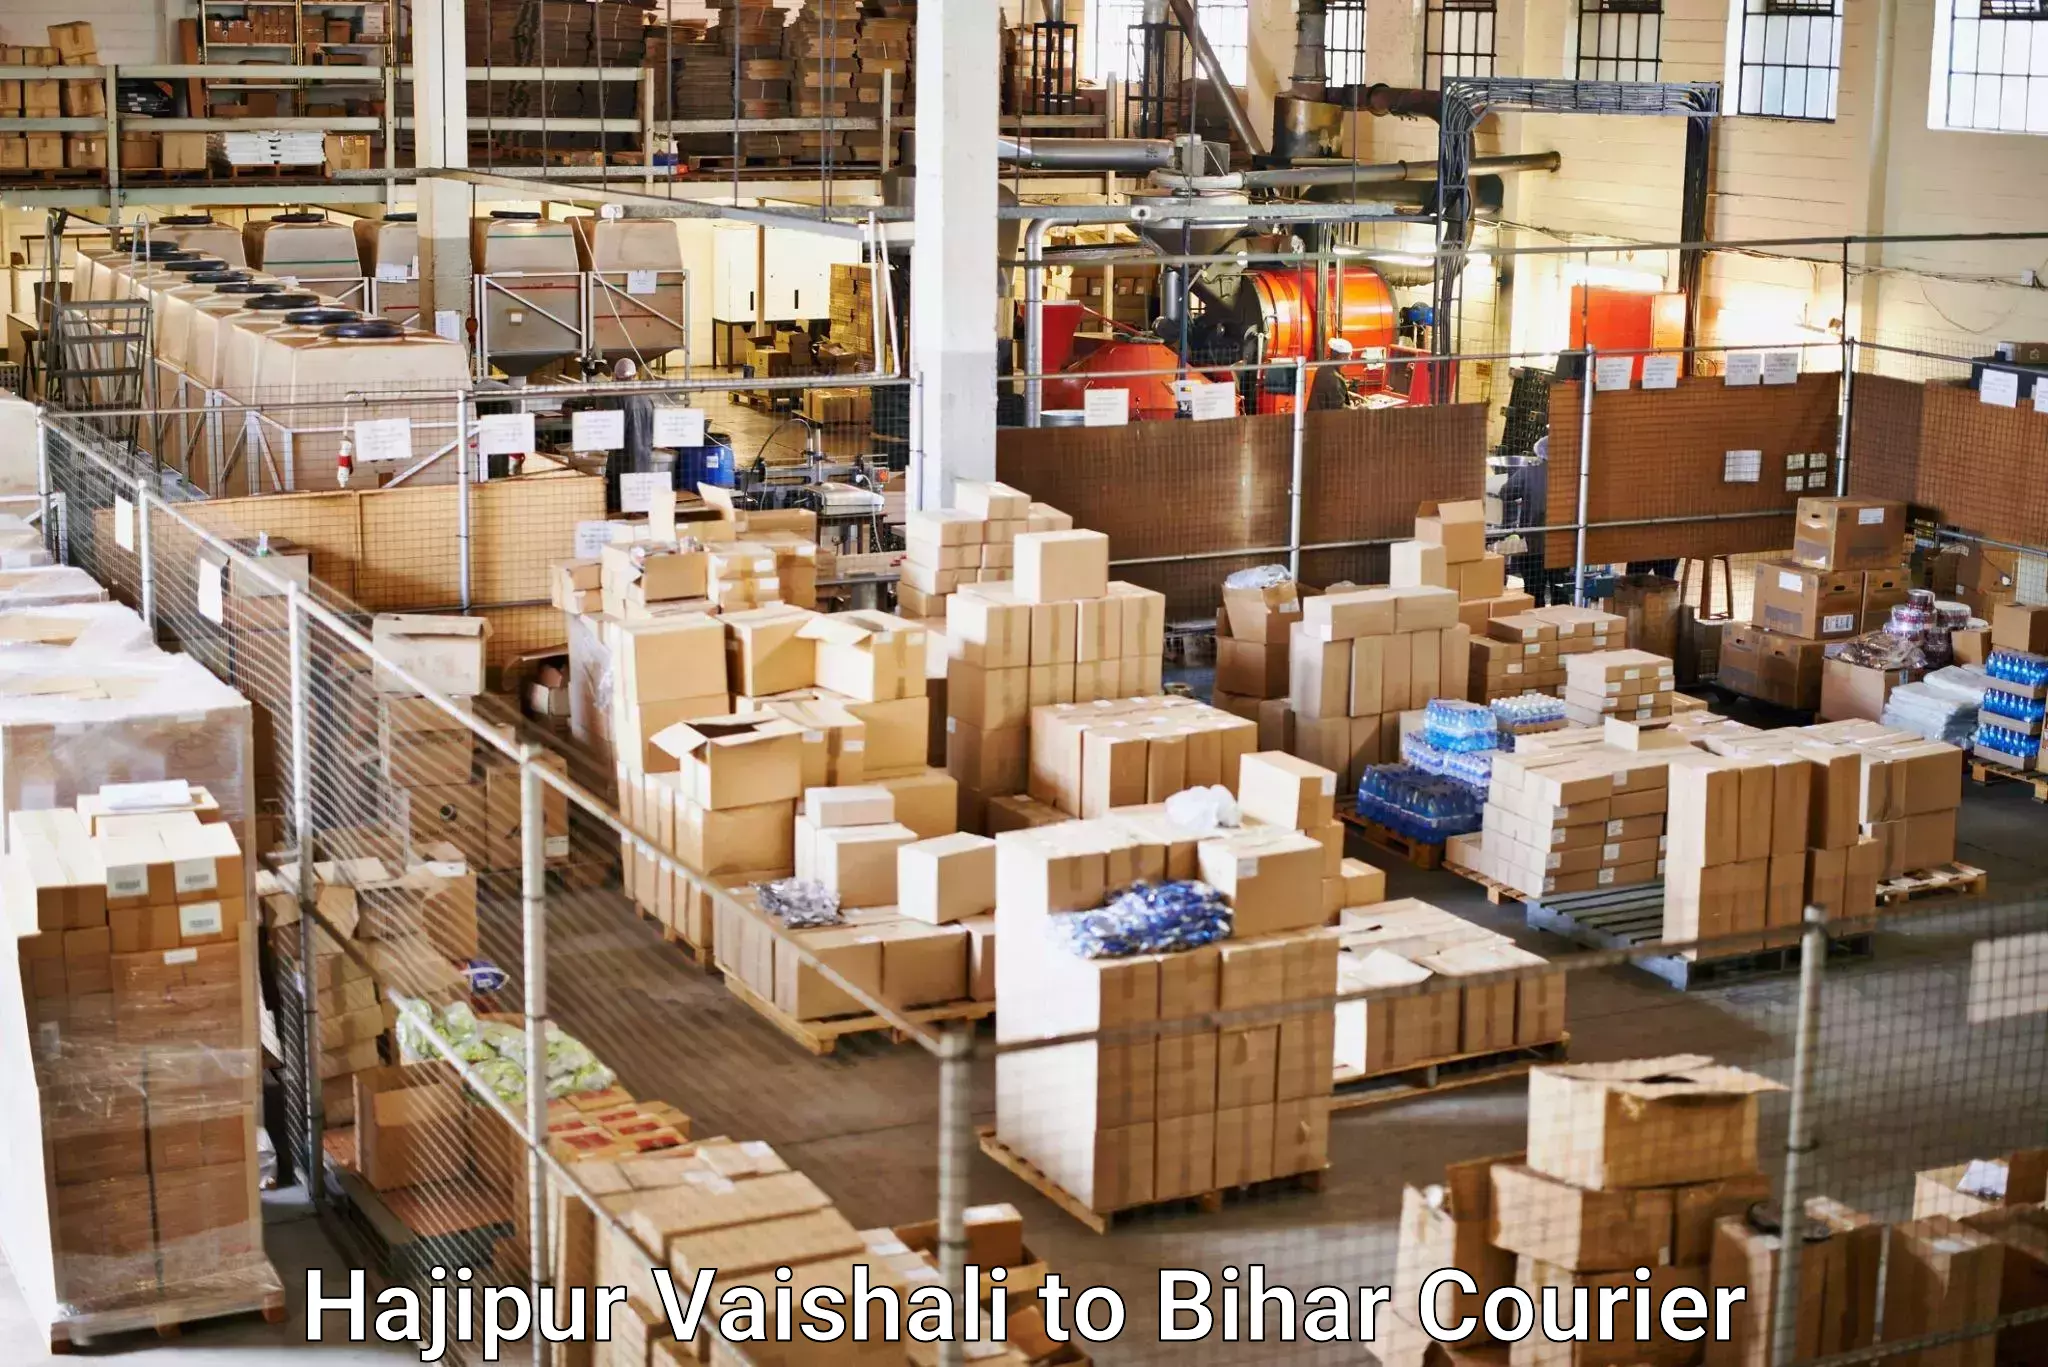 Secure shipping methods Hajipur Vaishali to Vaishali